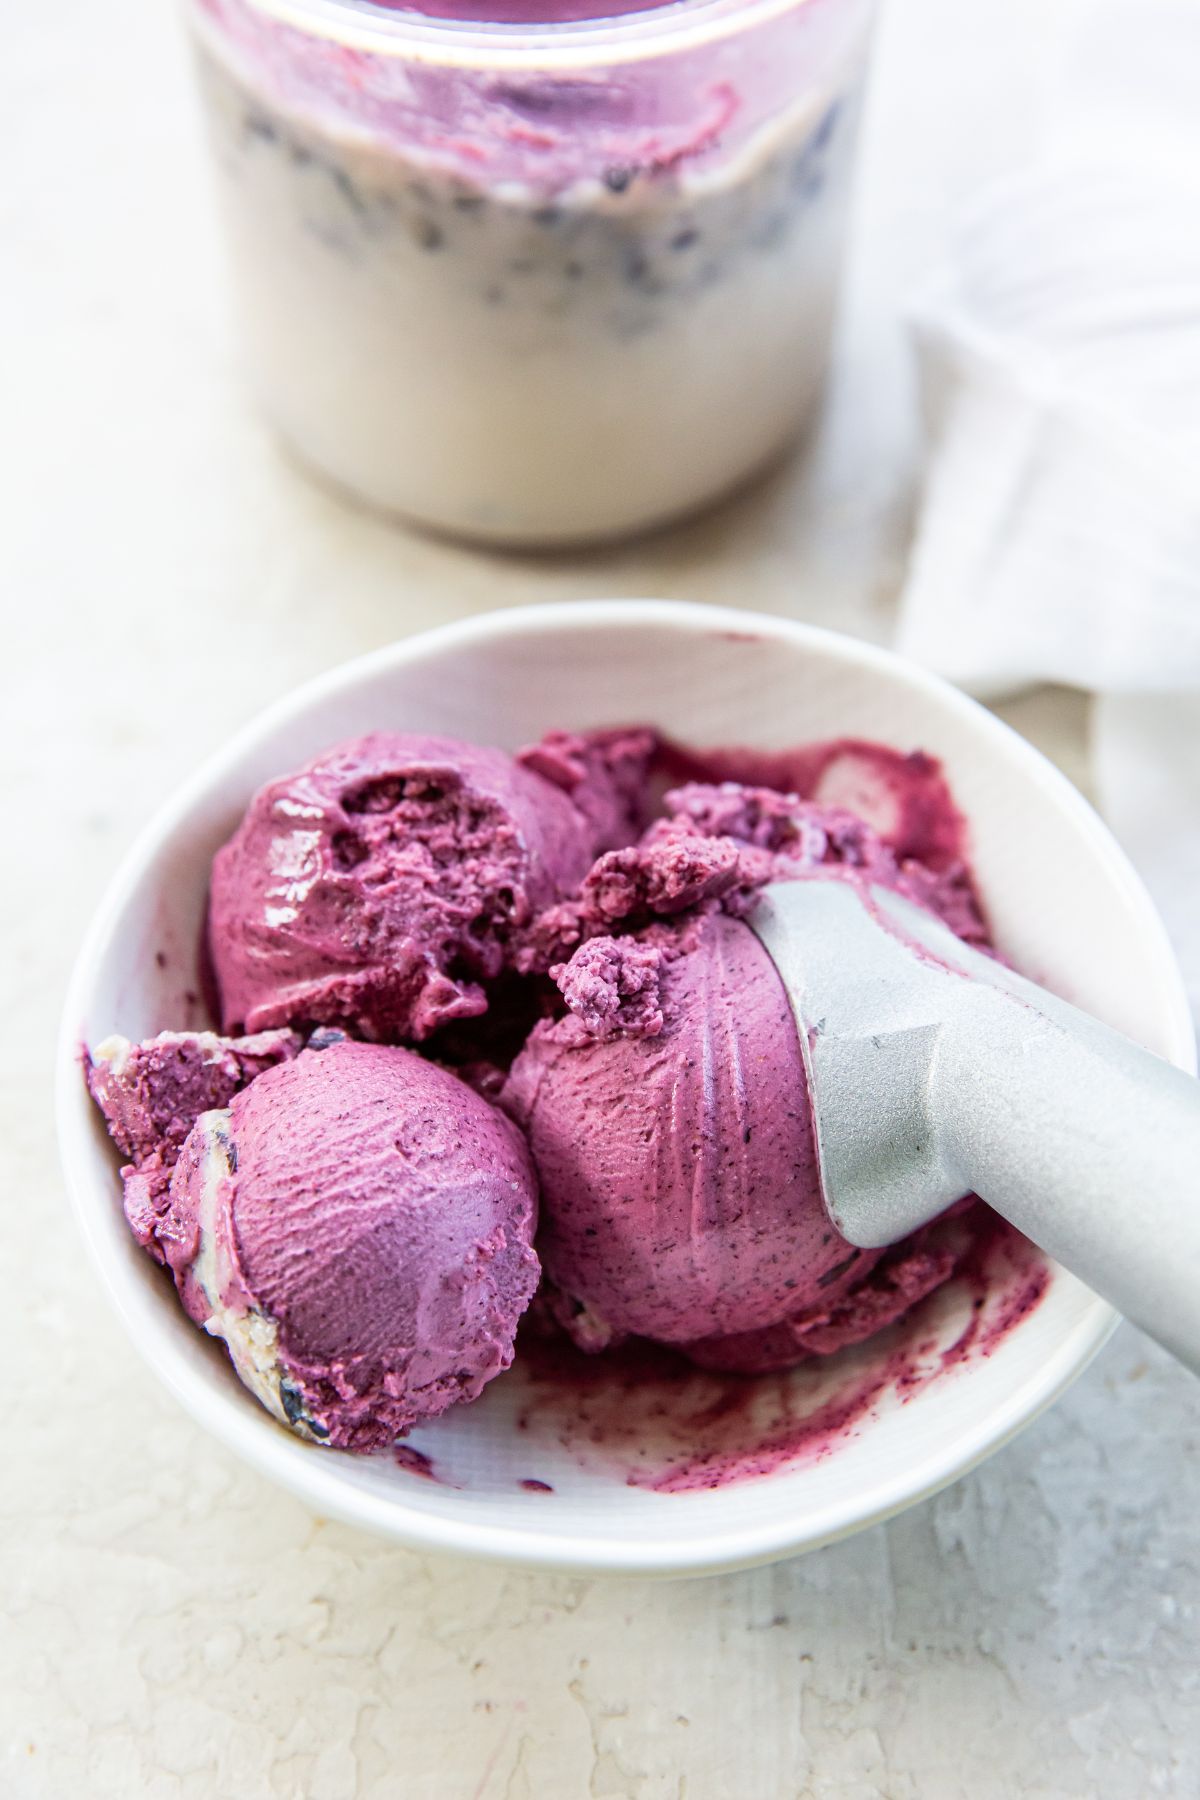 Purple ice cream scoop in a bowl.